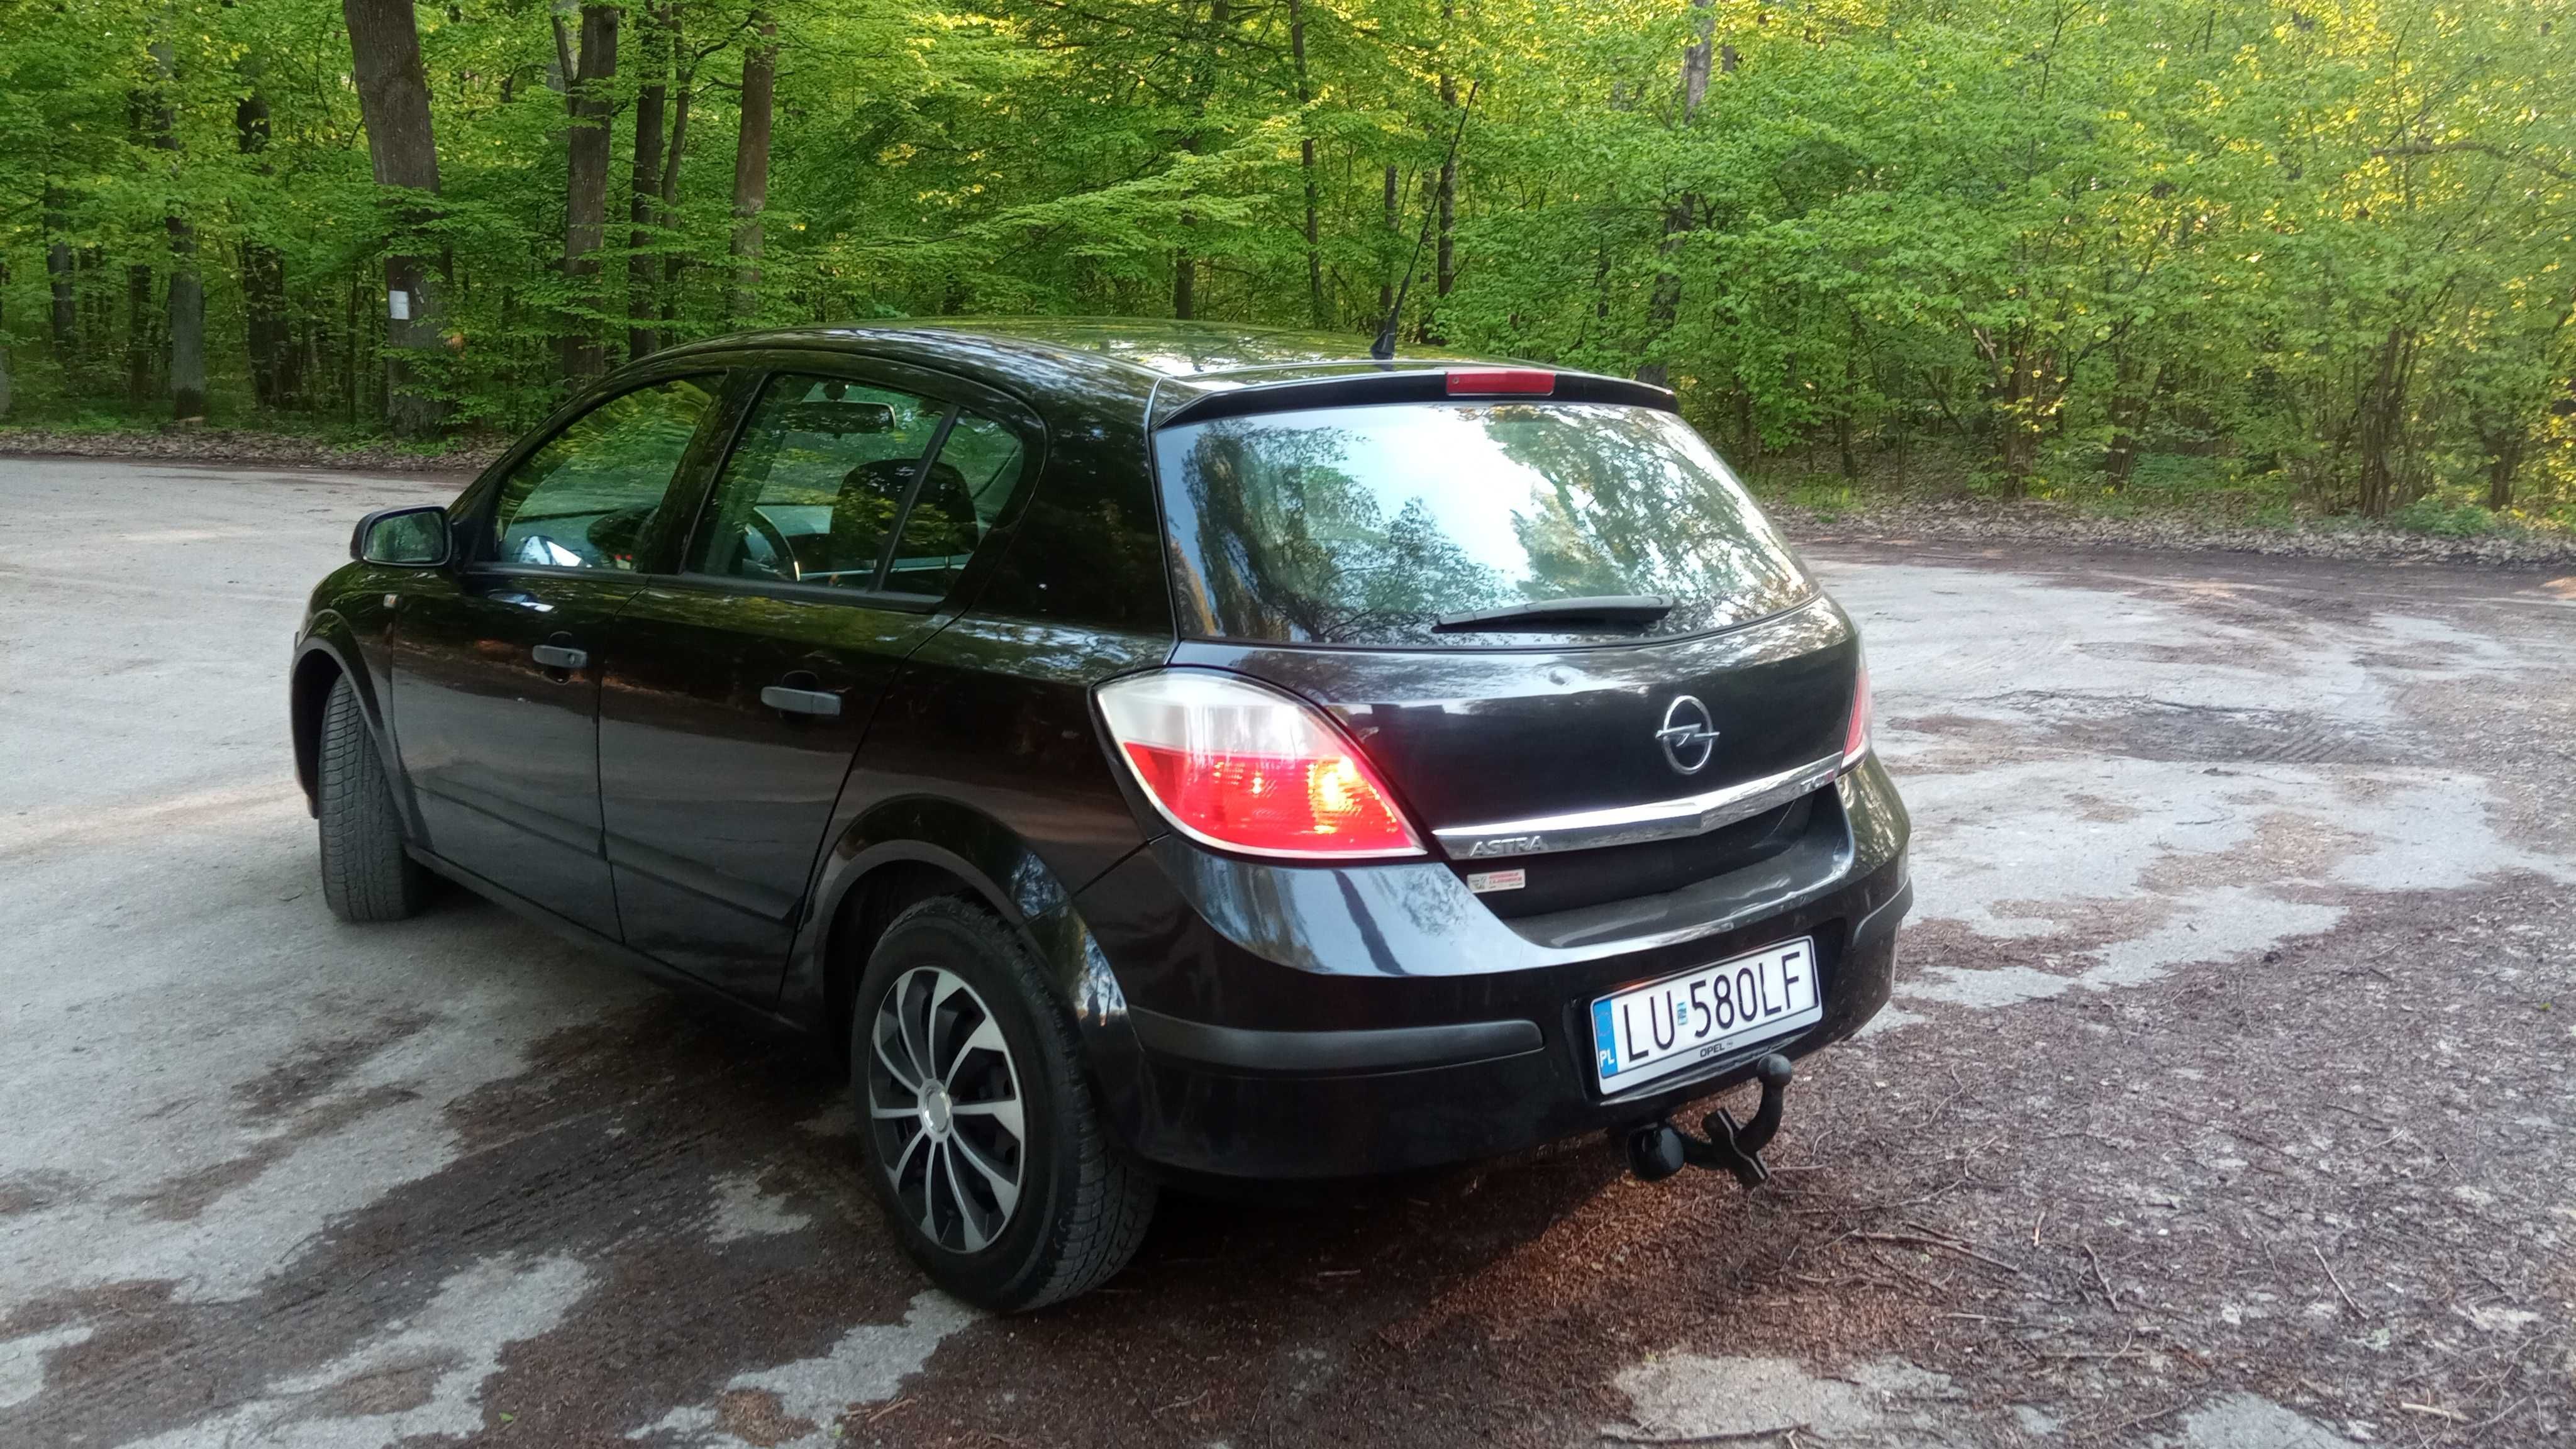 Opel Astra H 1.7CDTI 101KM.klima, tempomat,hak, stan bdb polecam.